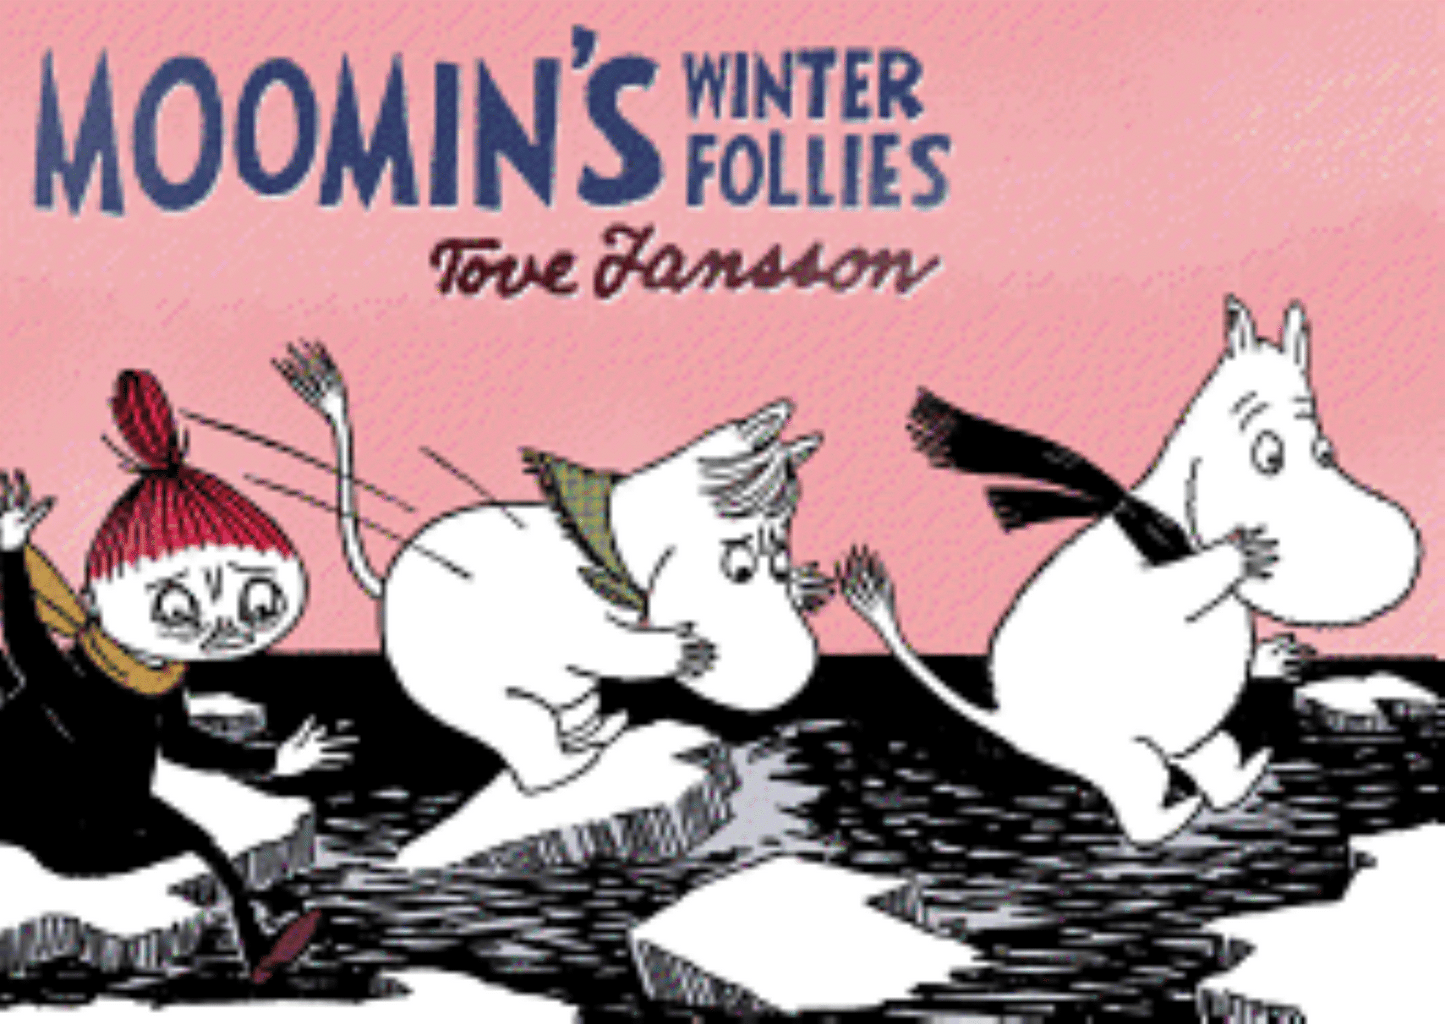 Moomins Winter Follies - Tove Jansson